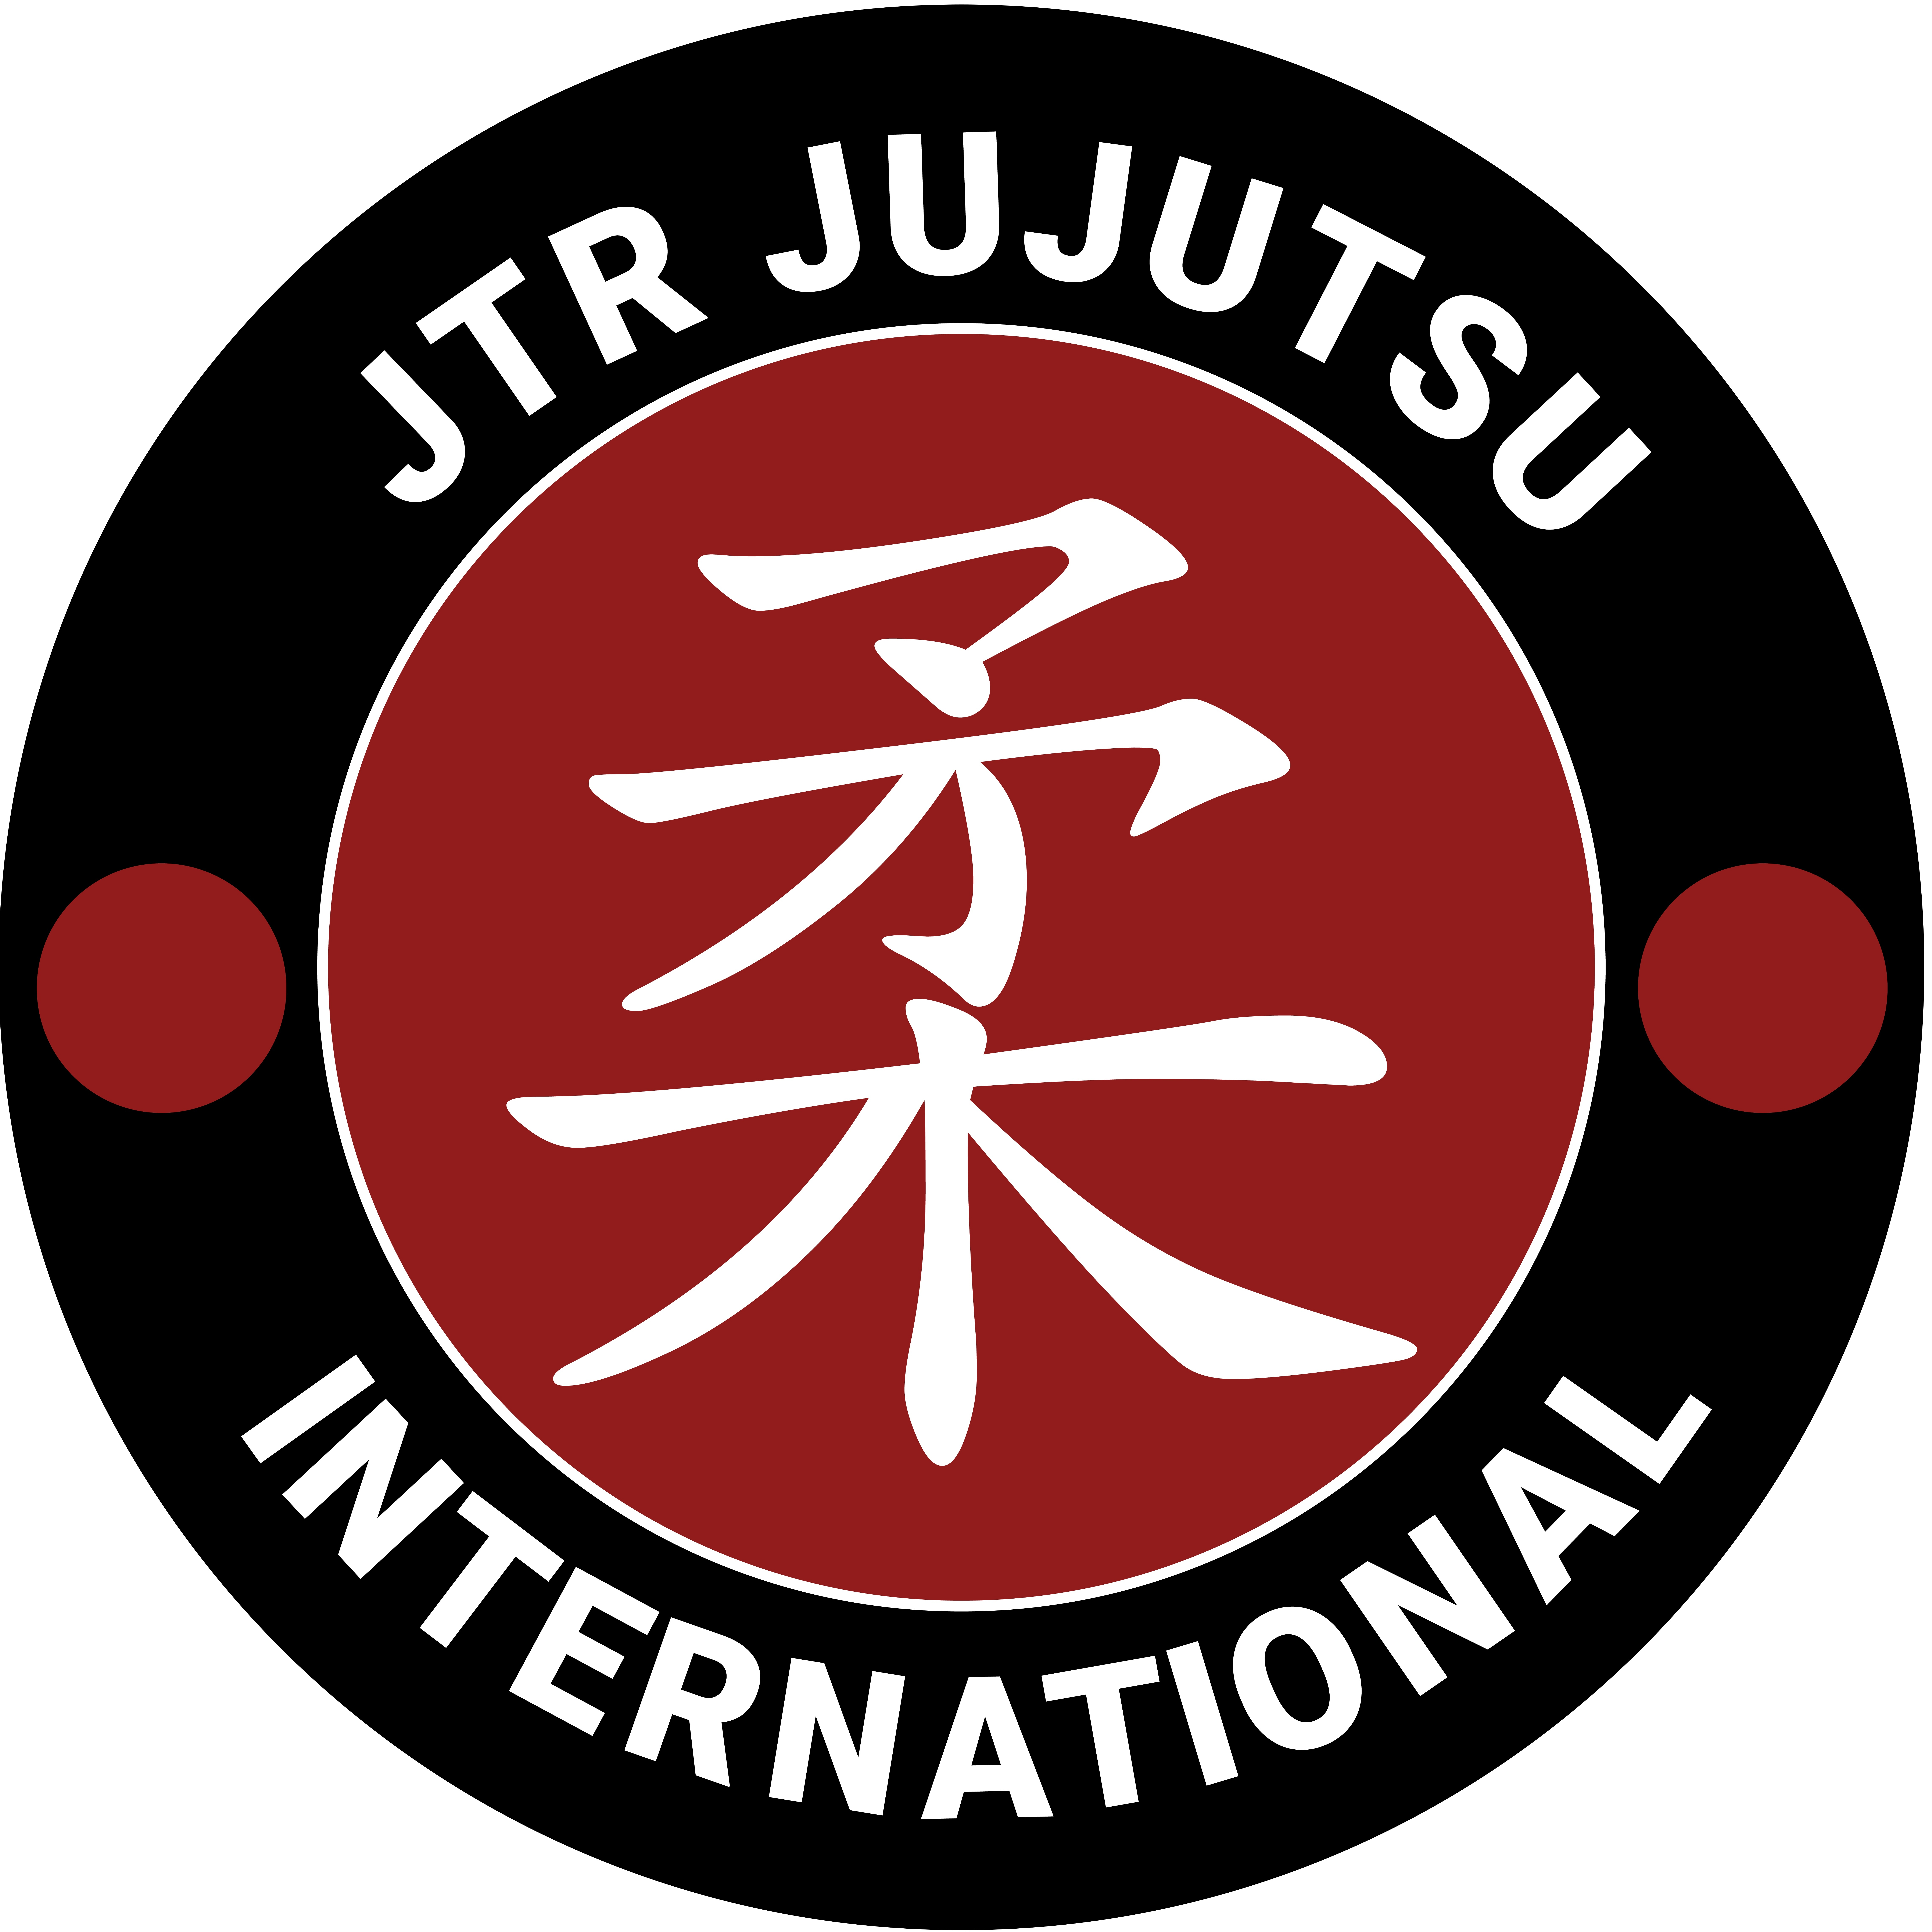 JTR Jujutsu logo